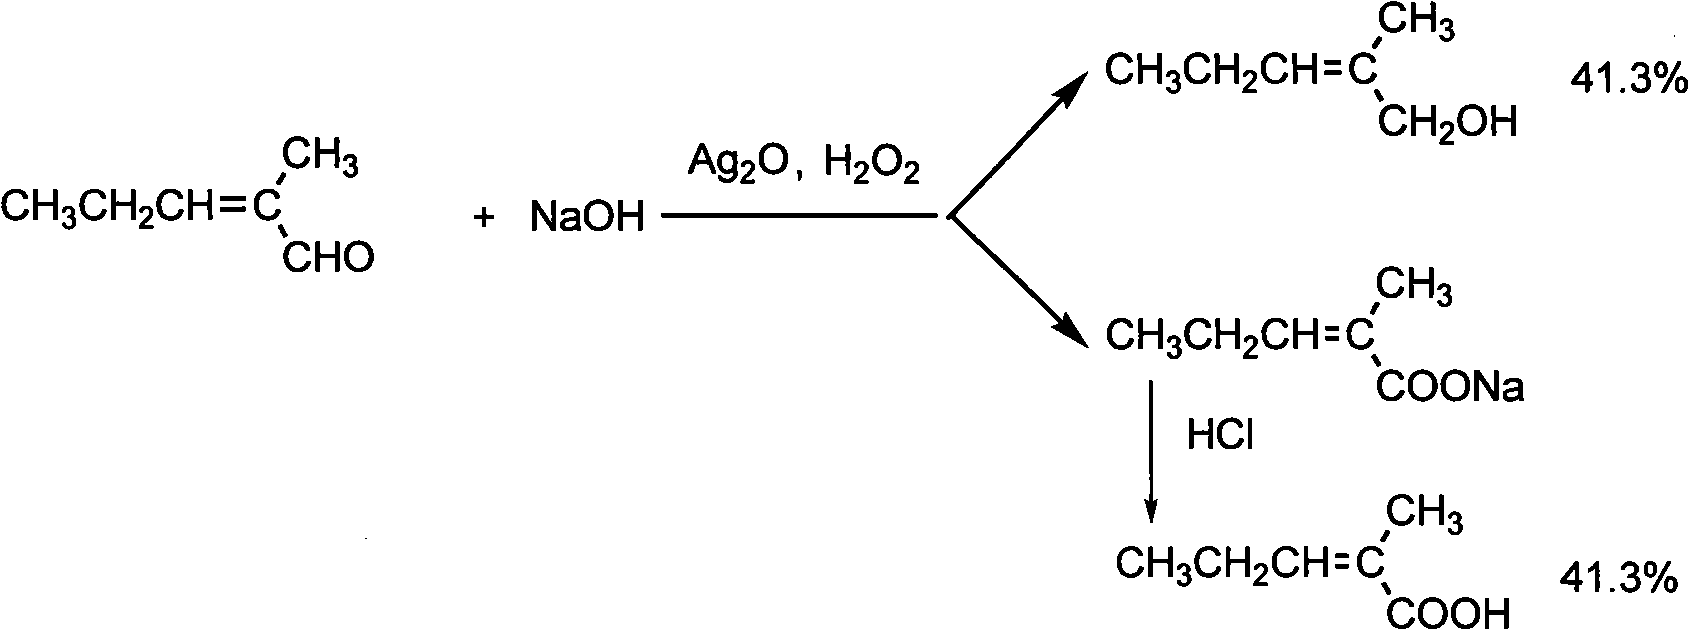 Production method of 2-methyl-2-pentenoic acid